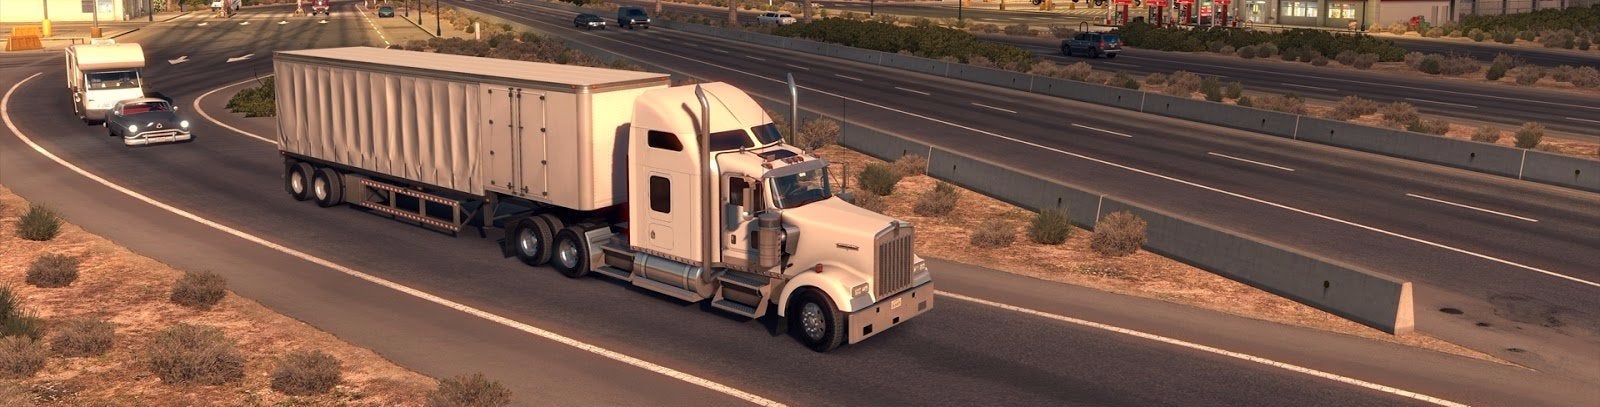 Image for American Truck Simulator review